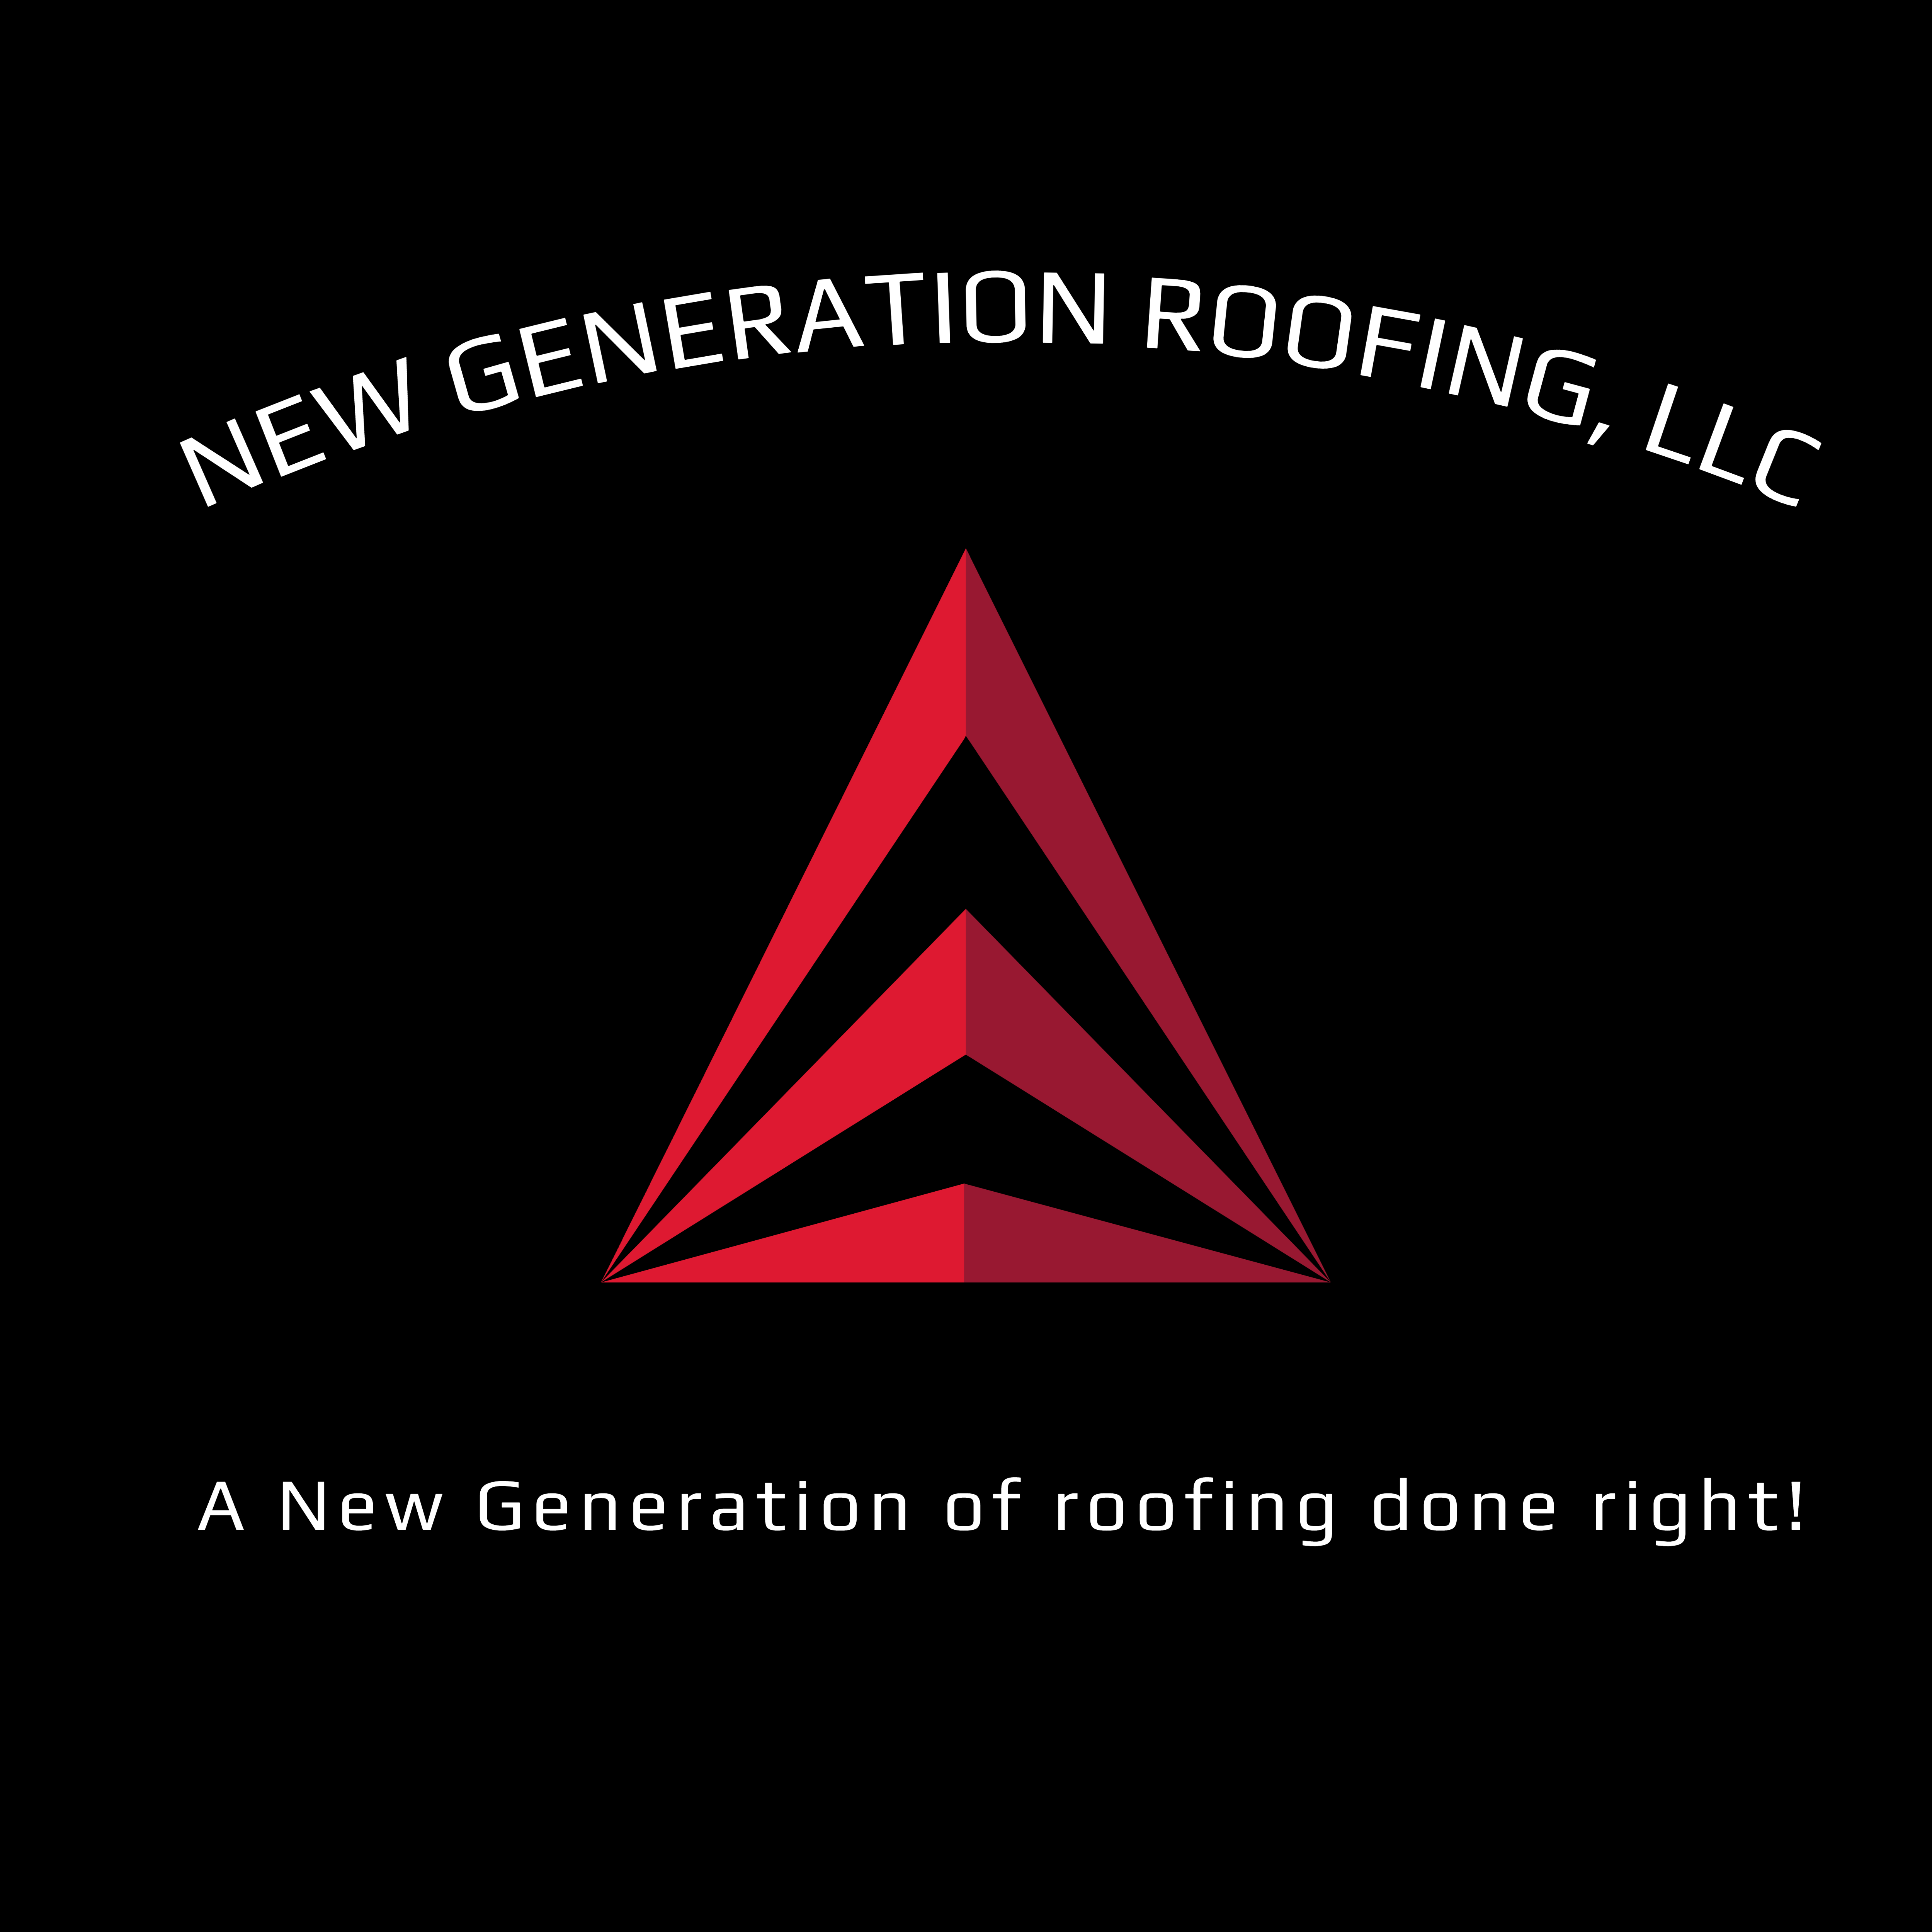 New Generation Roofing, LLC Logo